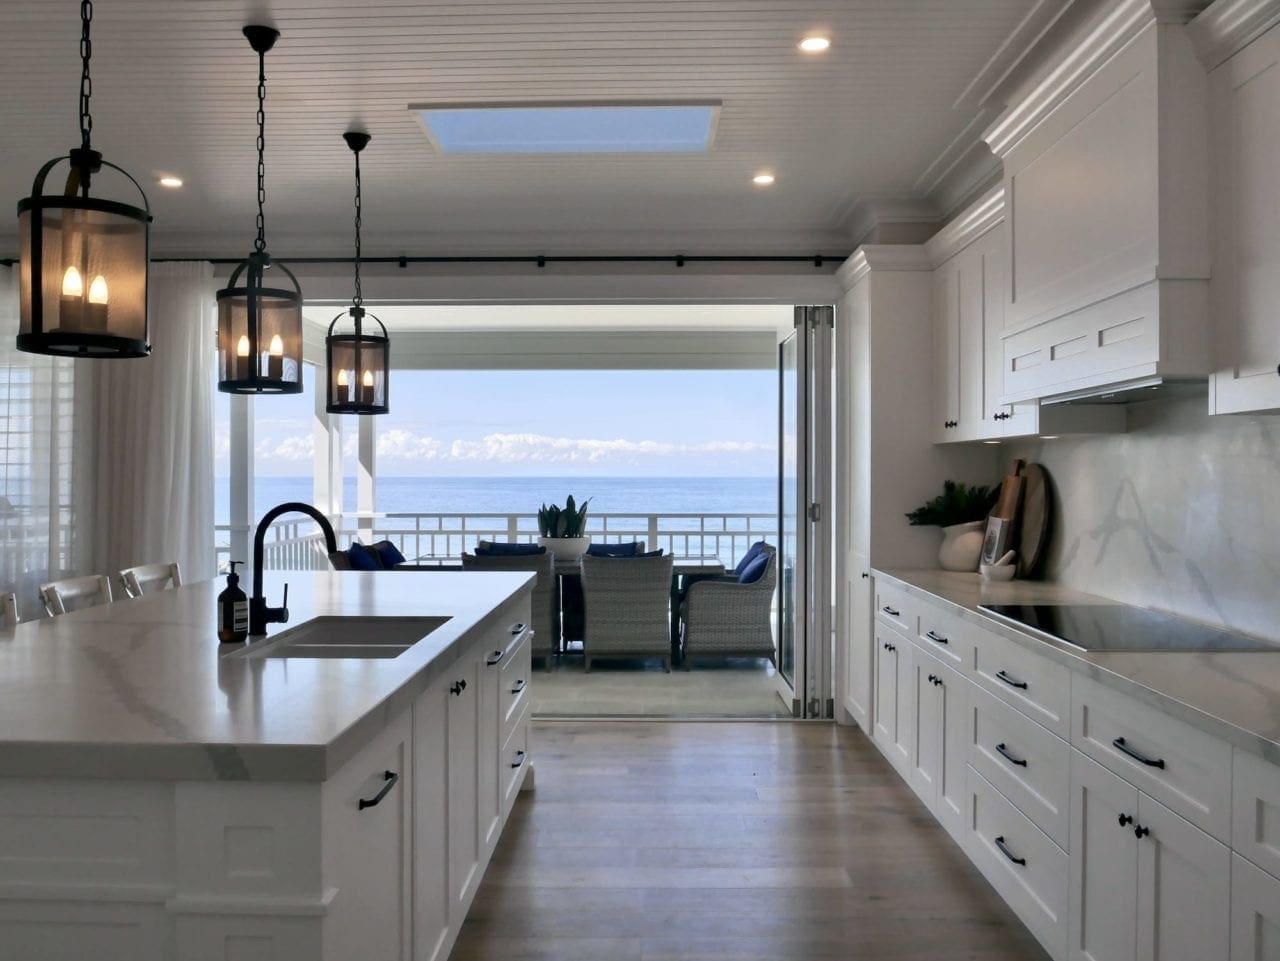 Ocean Glamour Kitchen Wombarra View 1280x961 